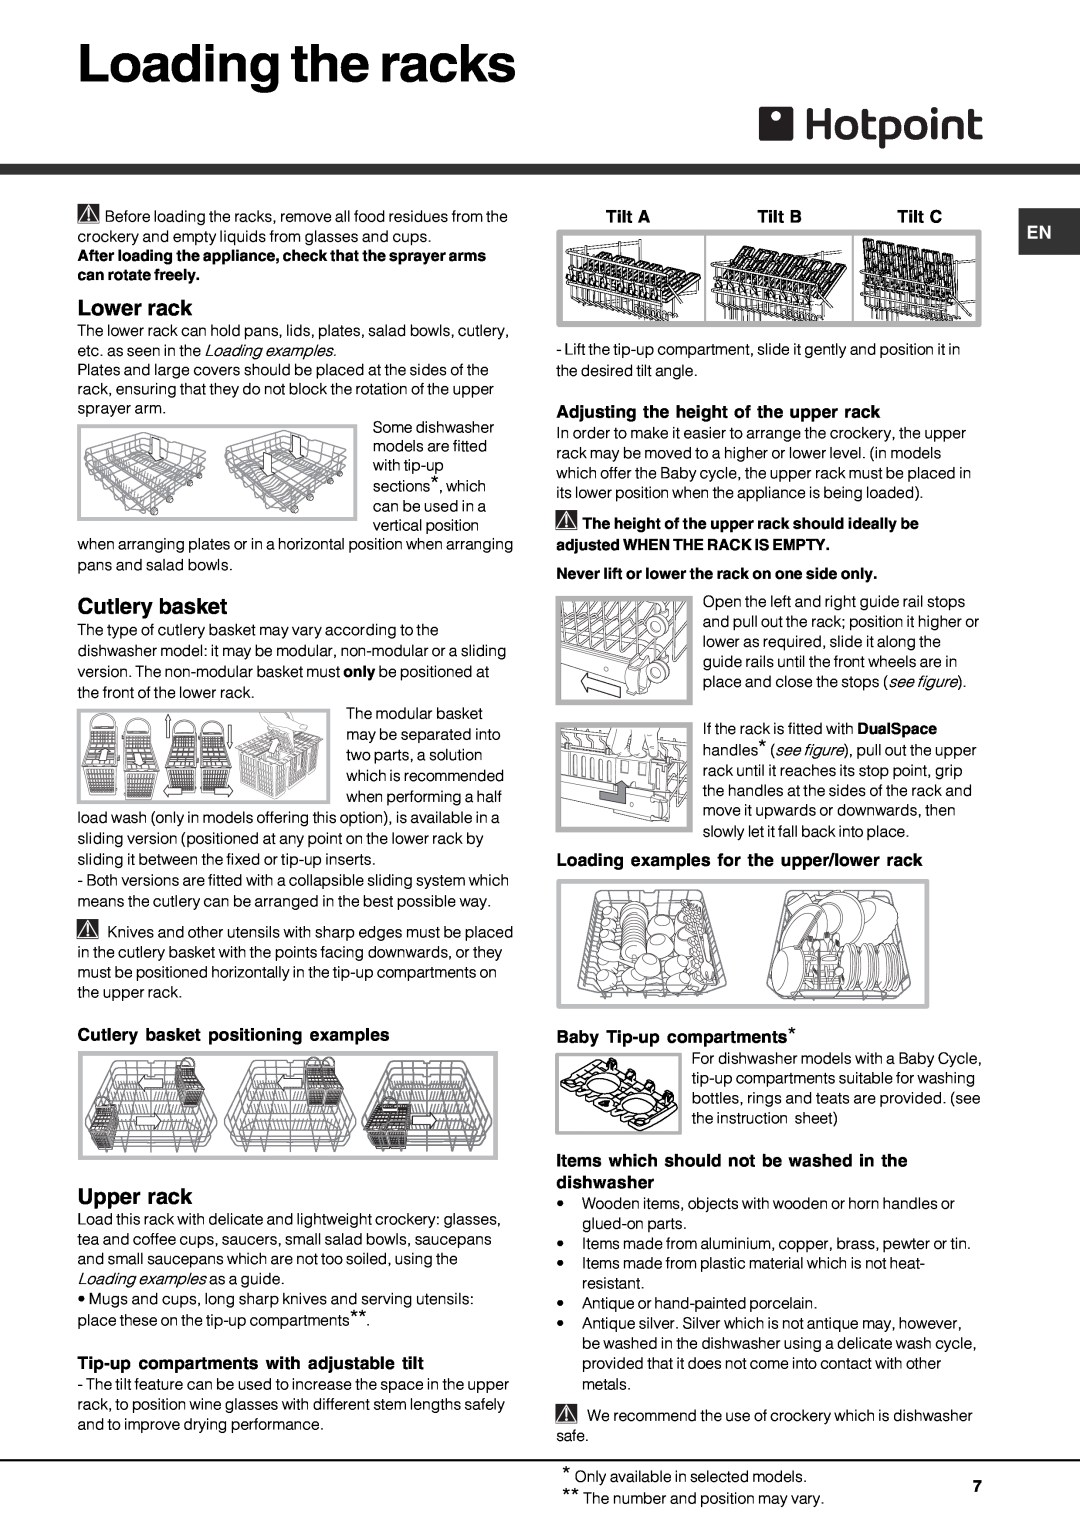 Hotpoint FDPF 481 manual Loading the racks, Lower rack, Cutlery basket, Upper rack 